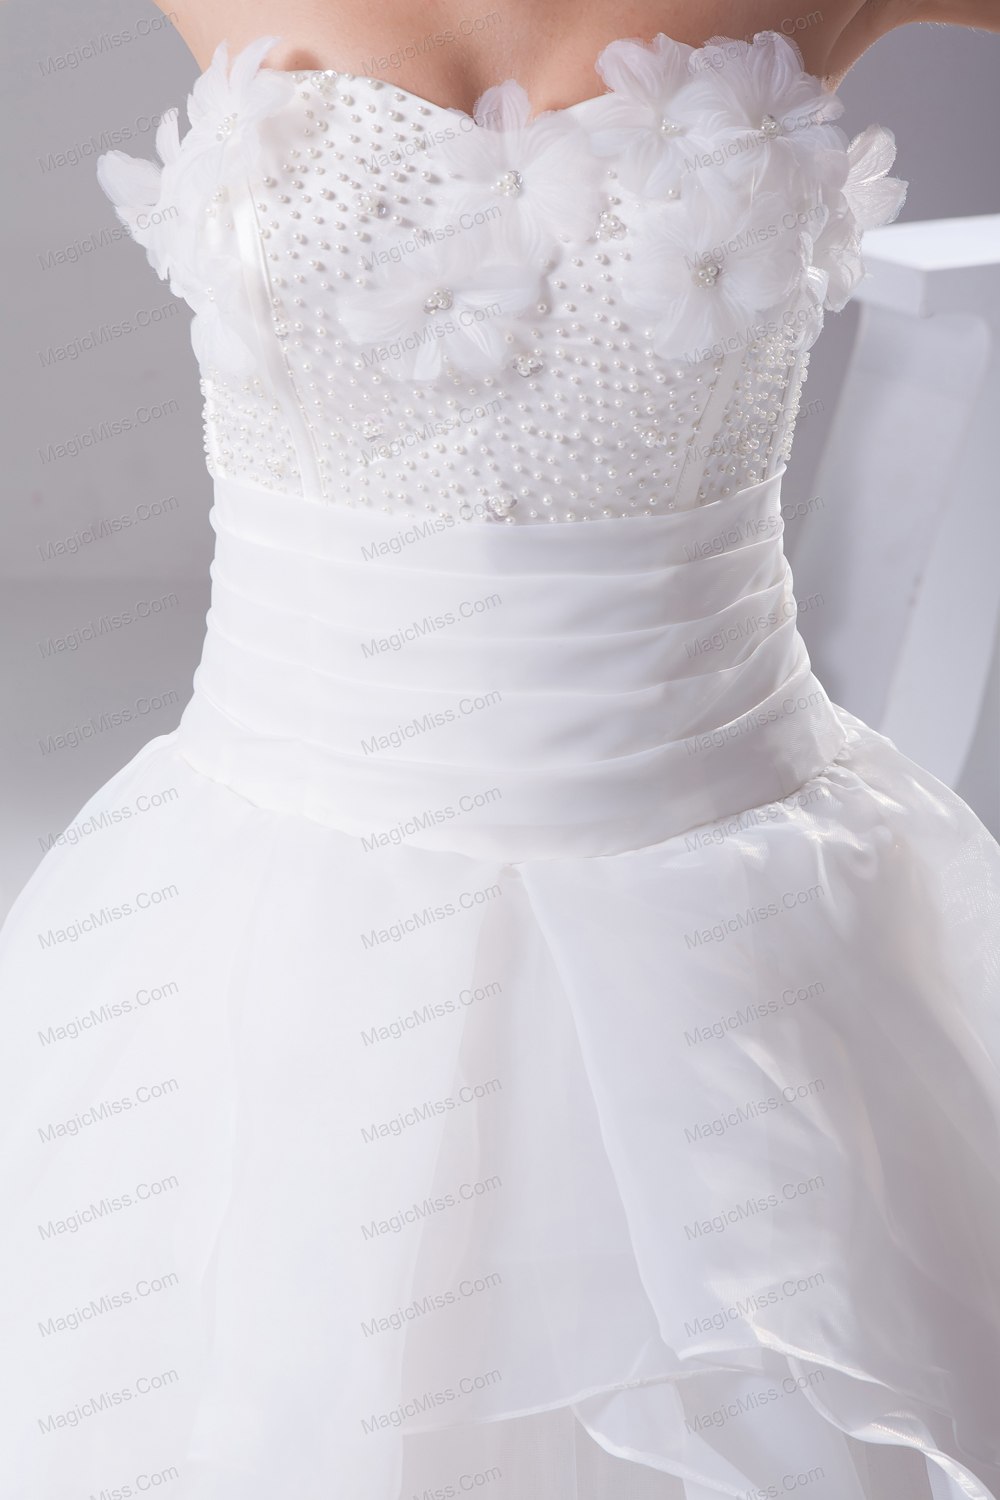 wholesale beading 2013 beautiful long ball gown sweetheart wedding dress